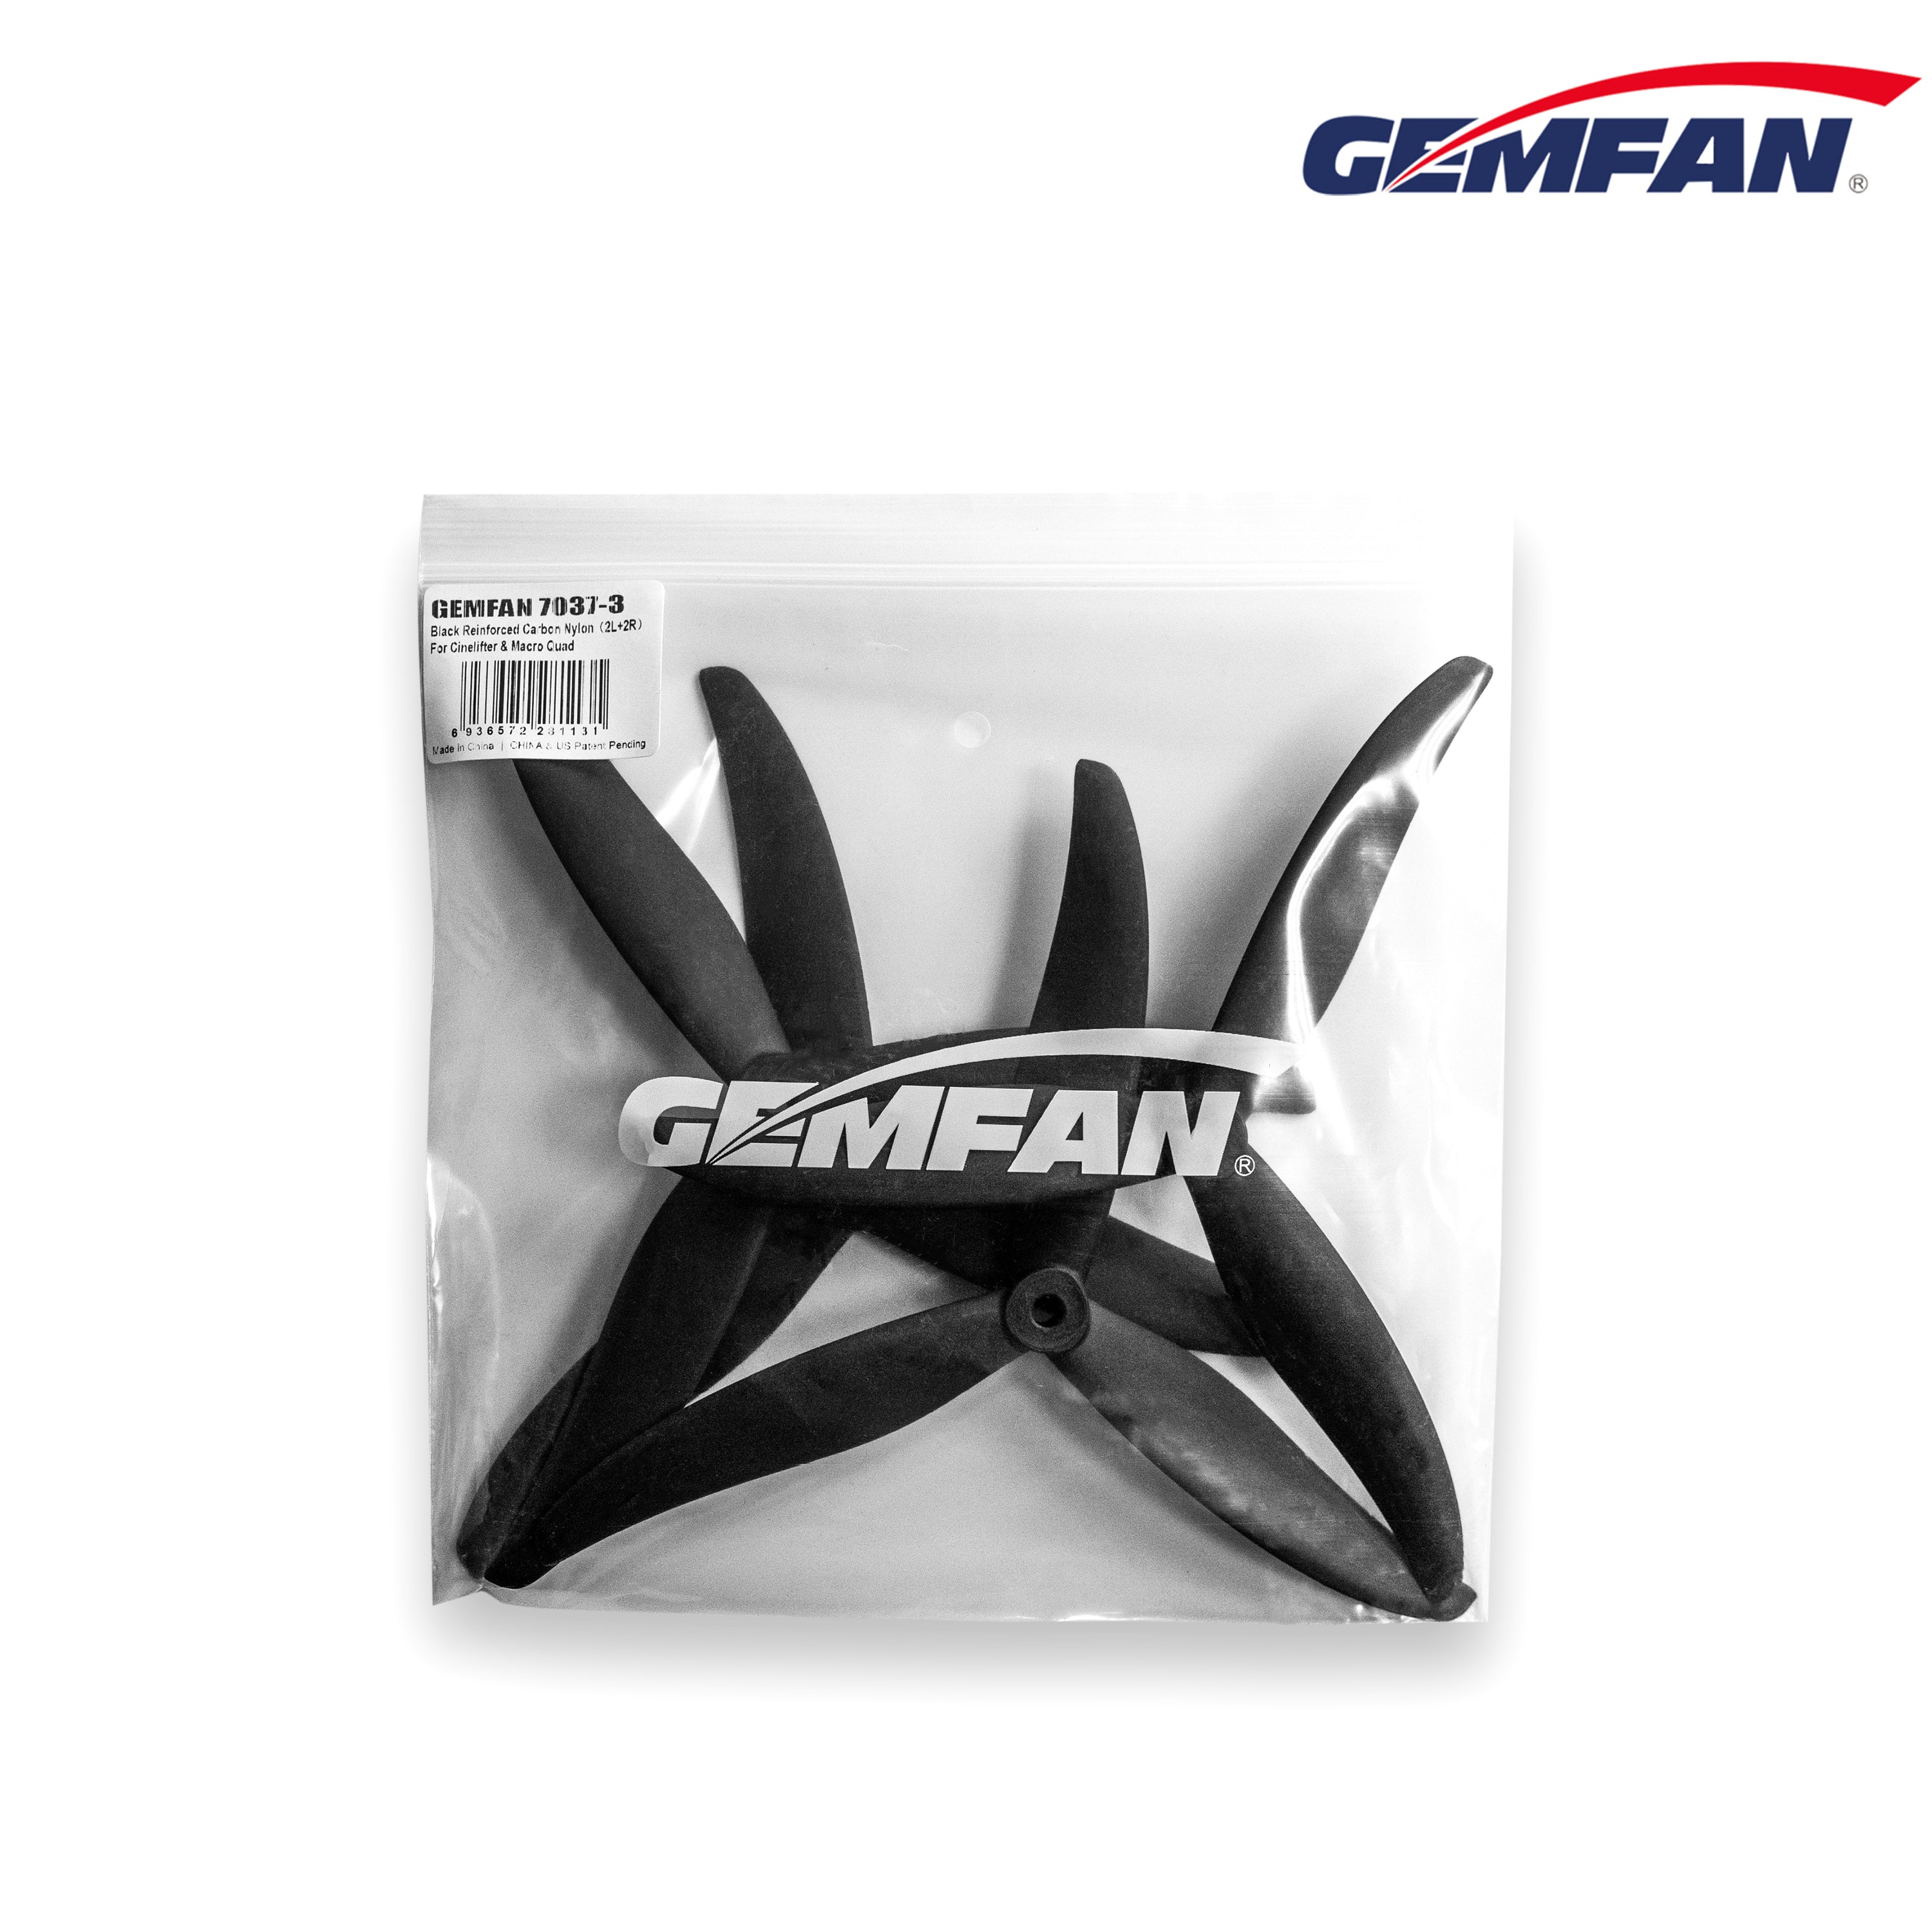 Gemfan 7037 CL Cinelifter 3-Blade Propeller Nylon Carbon (2CW+2CCW)